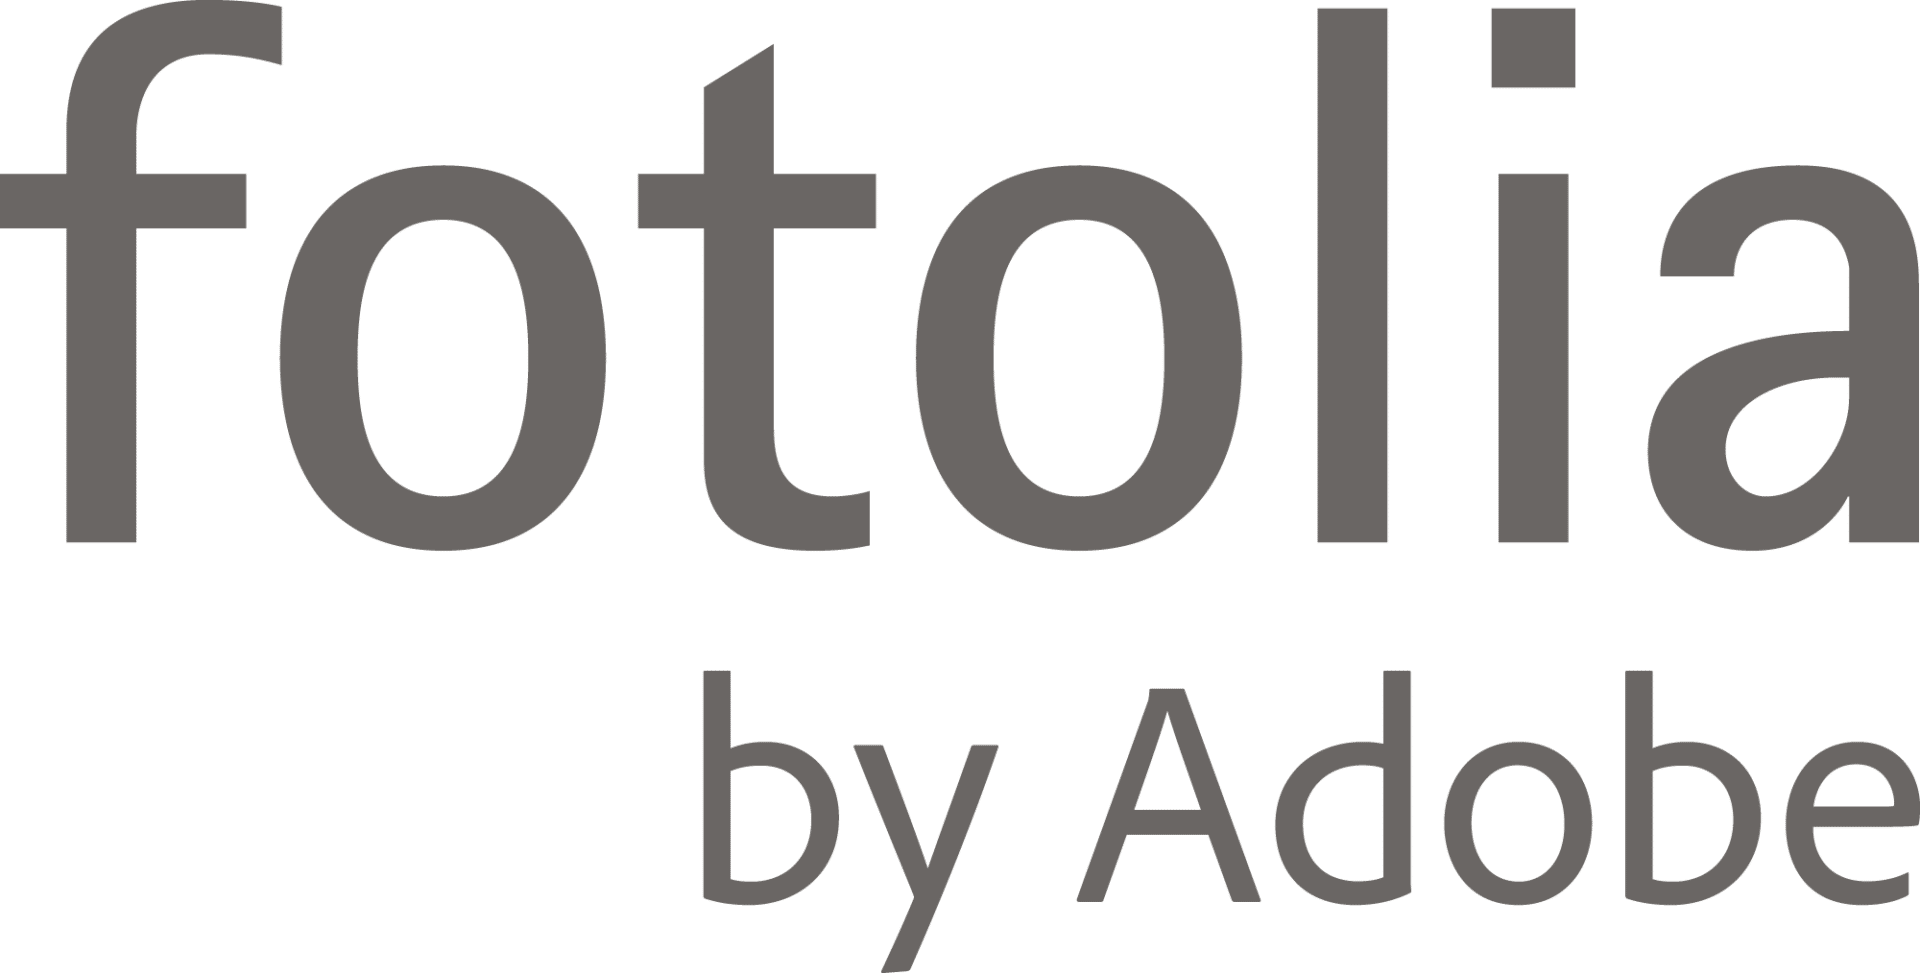 fotolia by adobe logo